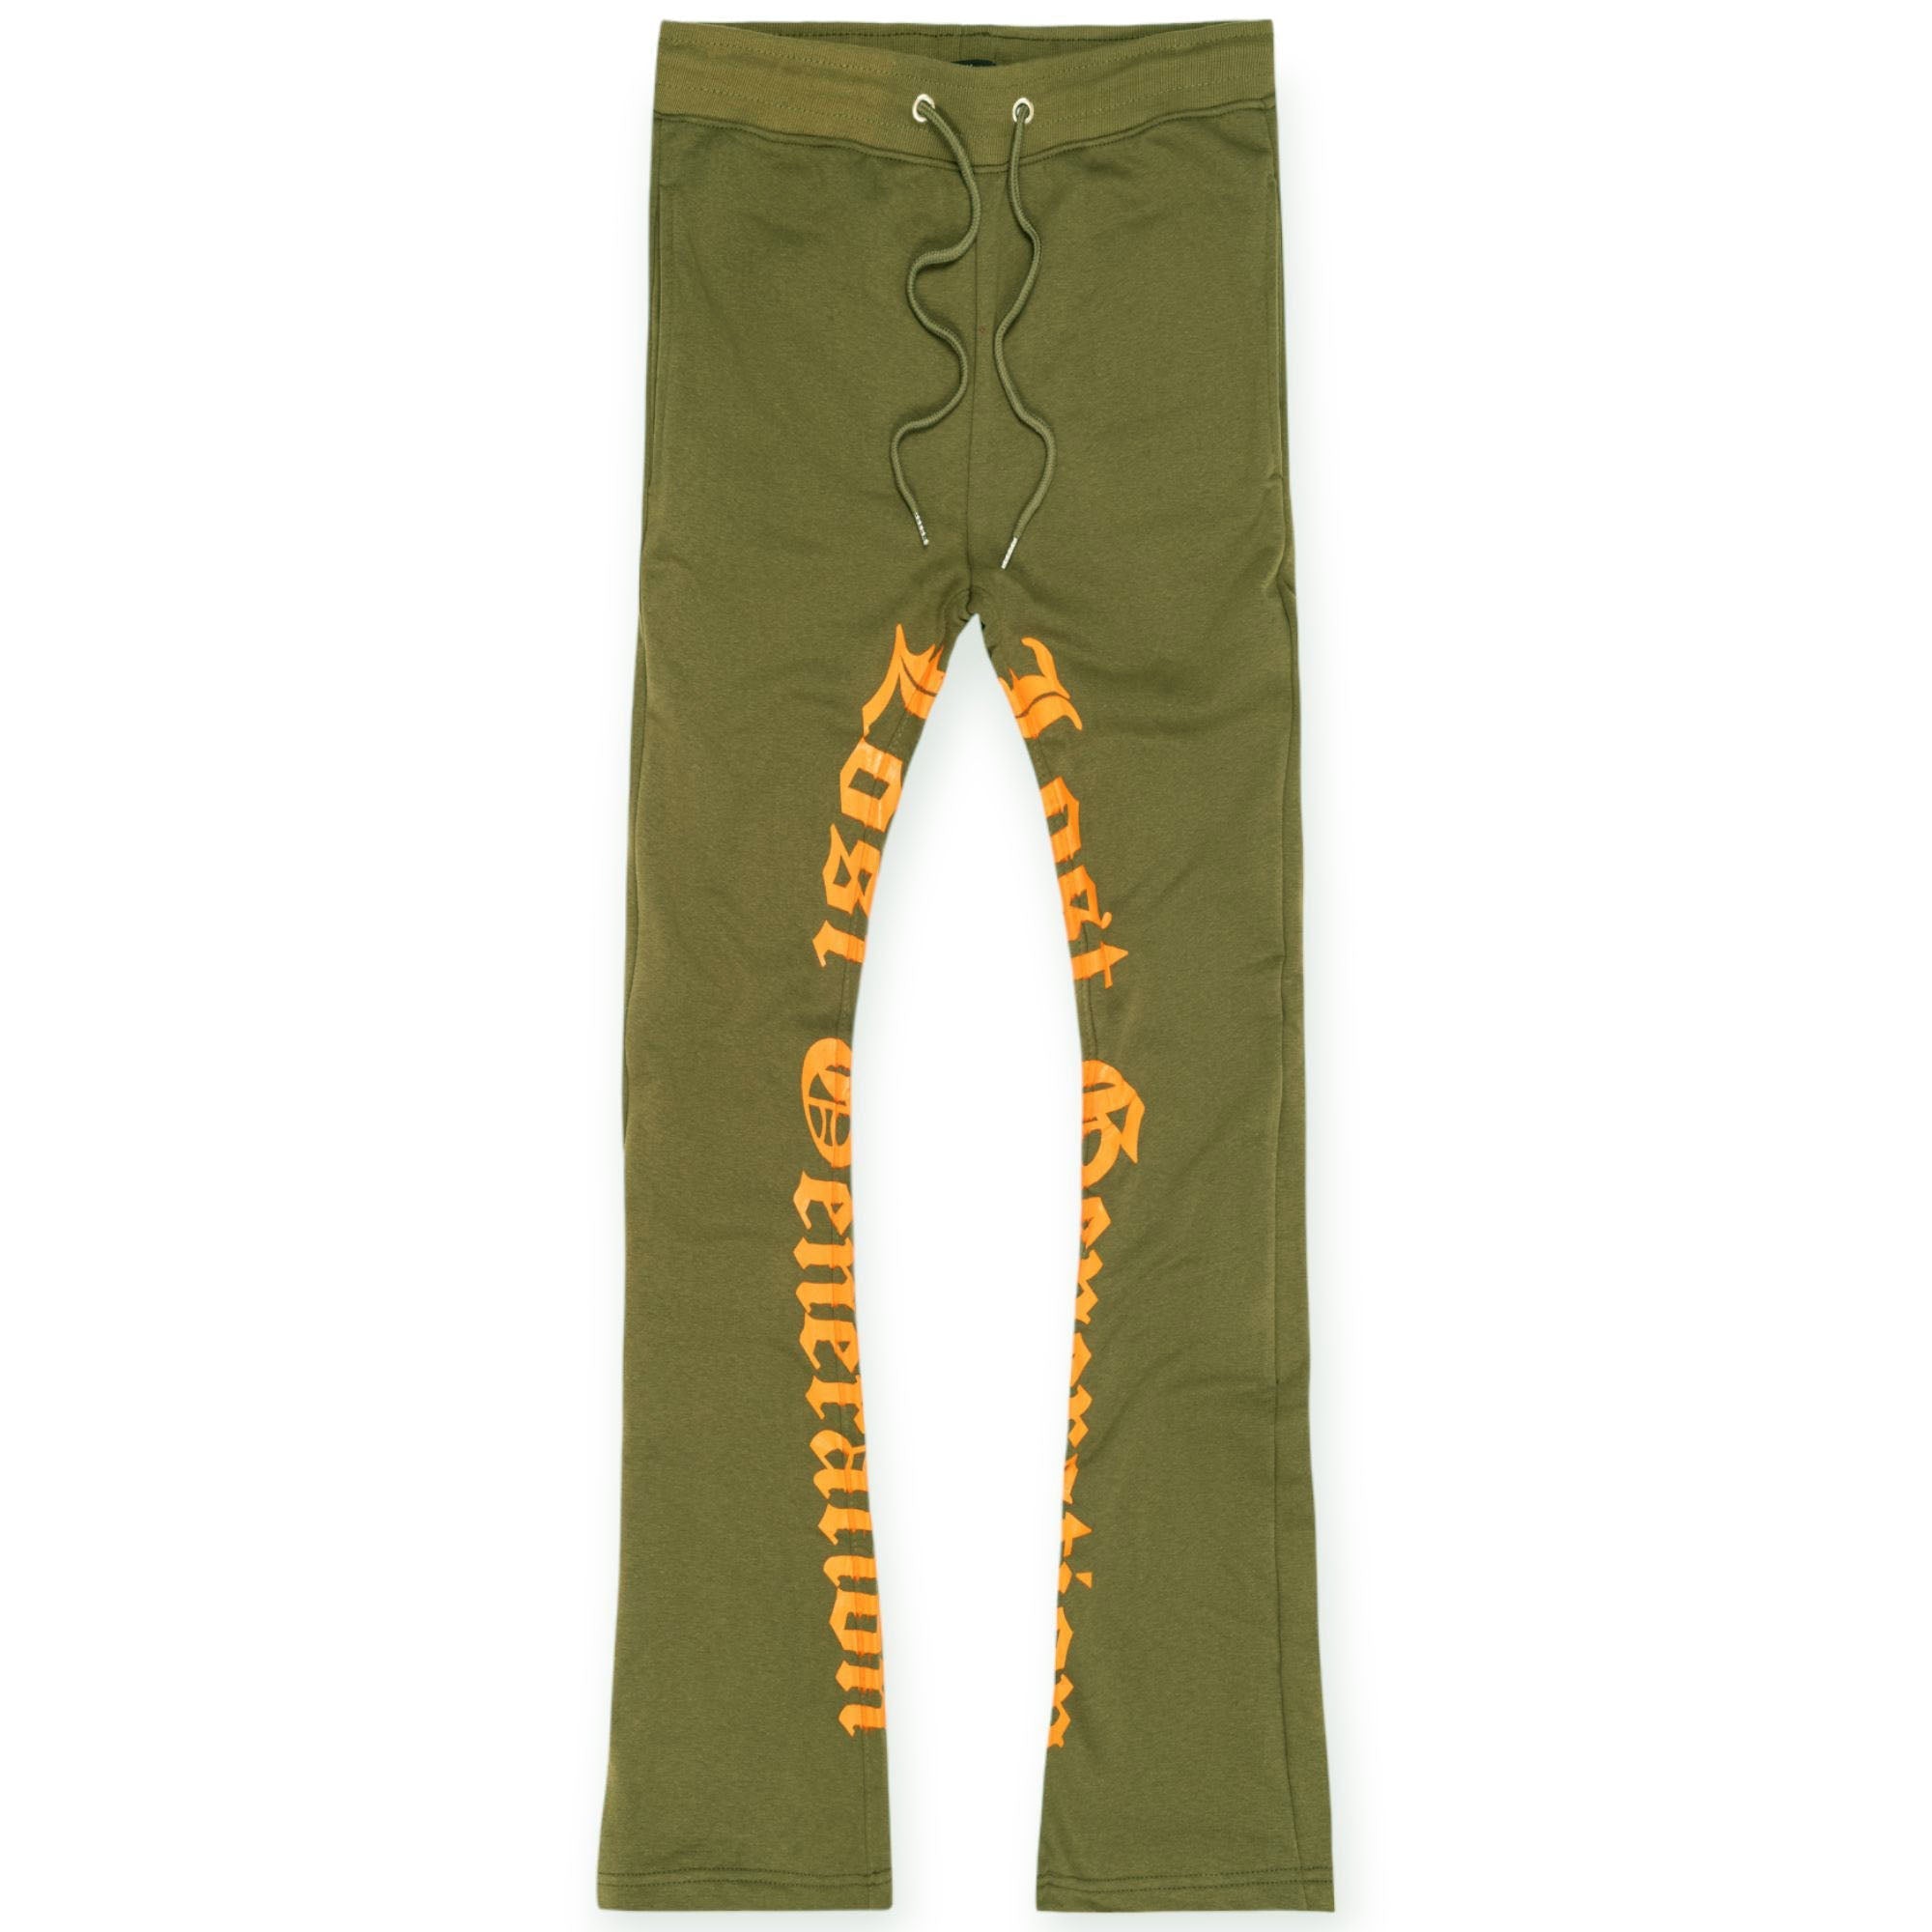 Nexus Clothing Men Lost Generation Stacked Sweatpants (Olive Green & Orange)-Olive Bright Orange-Small-Nexus Clothing